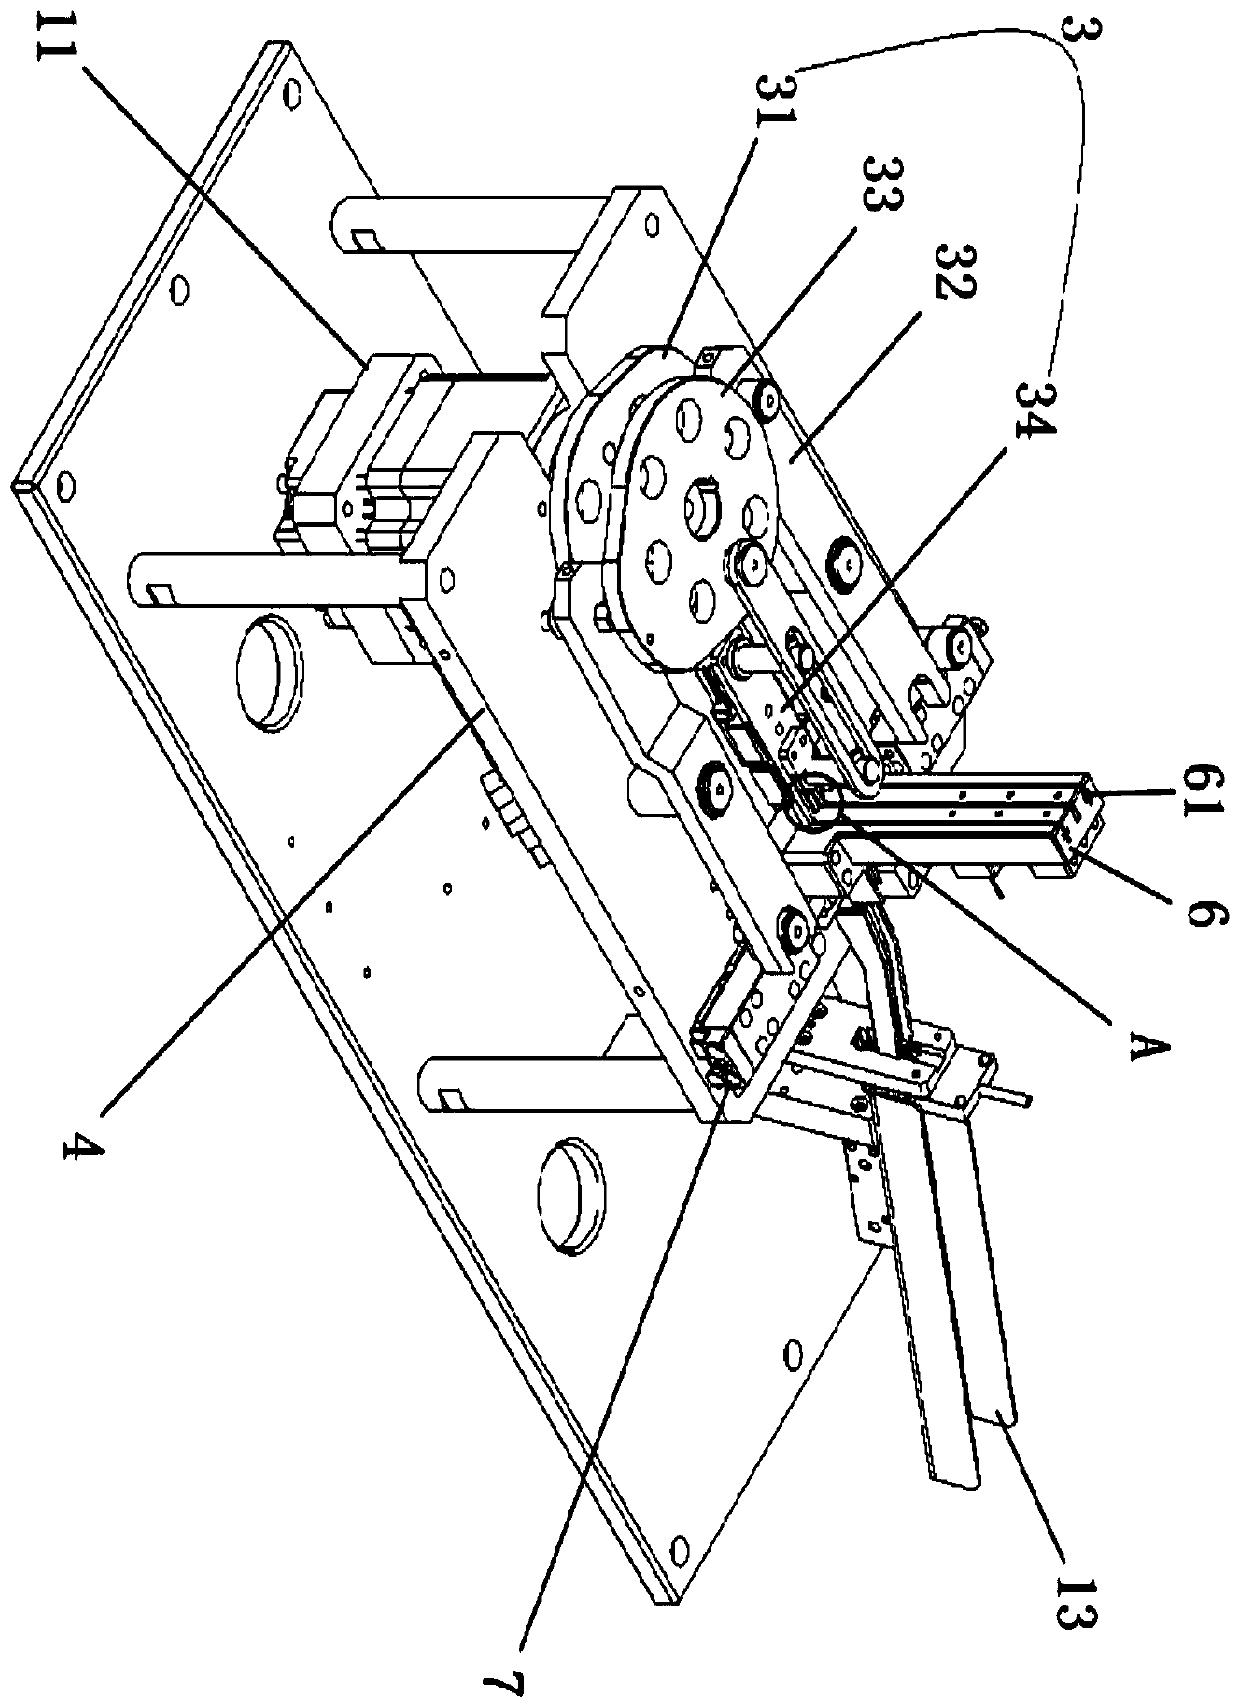 High speed pressing equipment for flint wheel